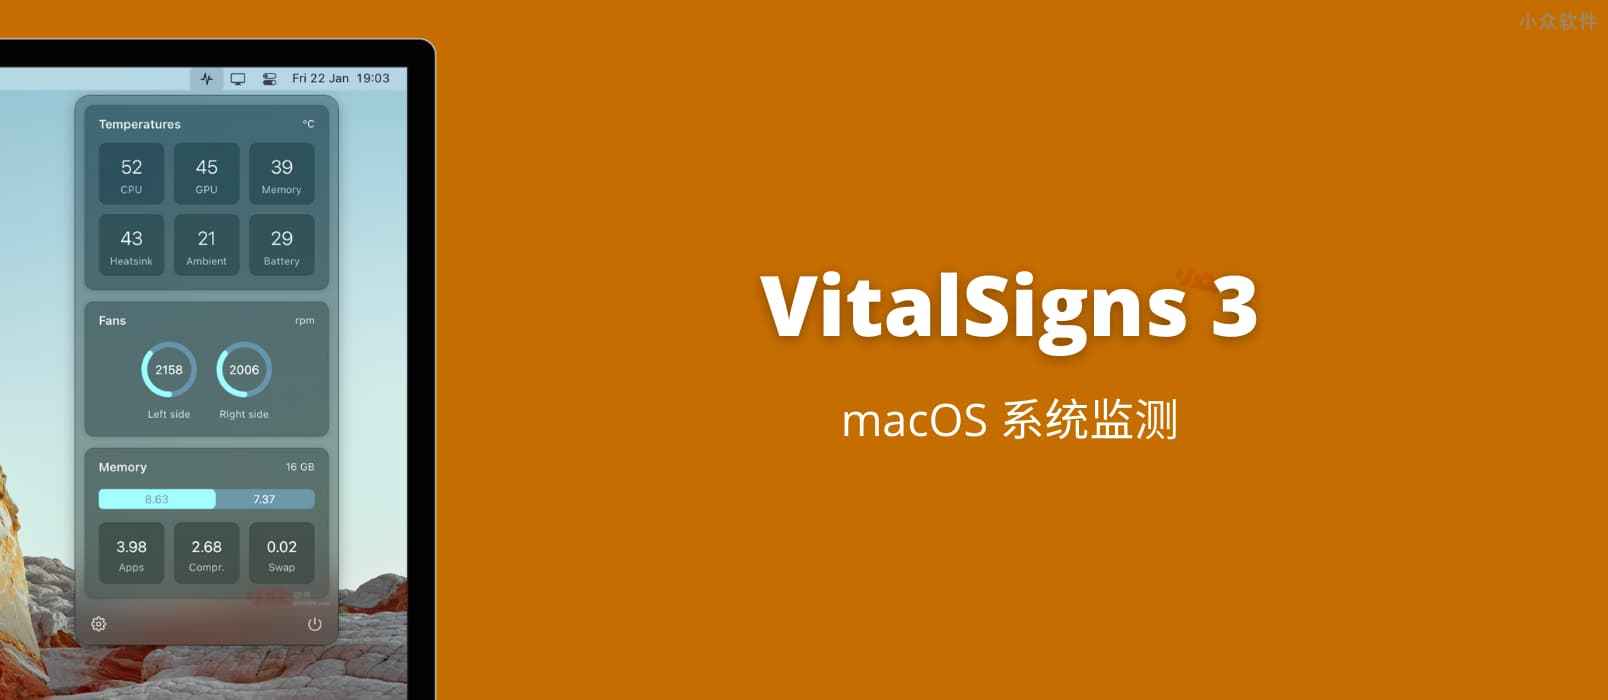 VitalSigns 3 - 免费的 macOS 系统监测工具，包括 10+ 种传感器数据